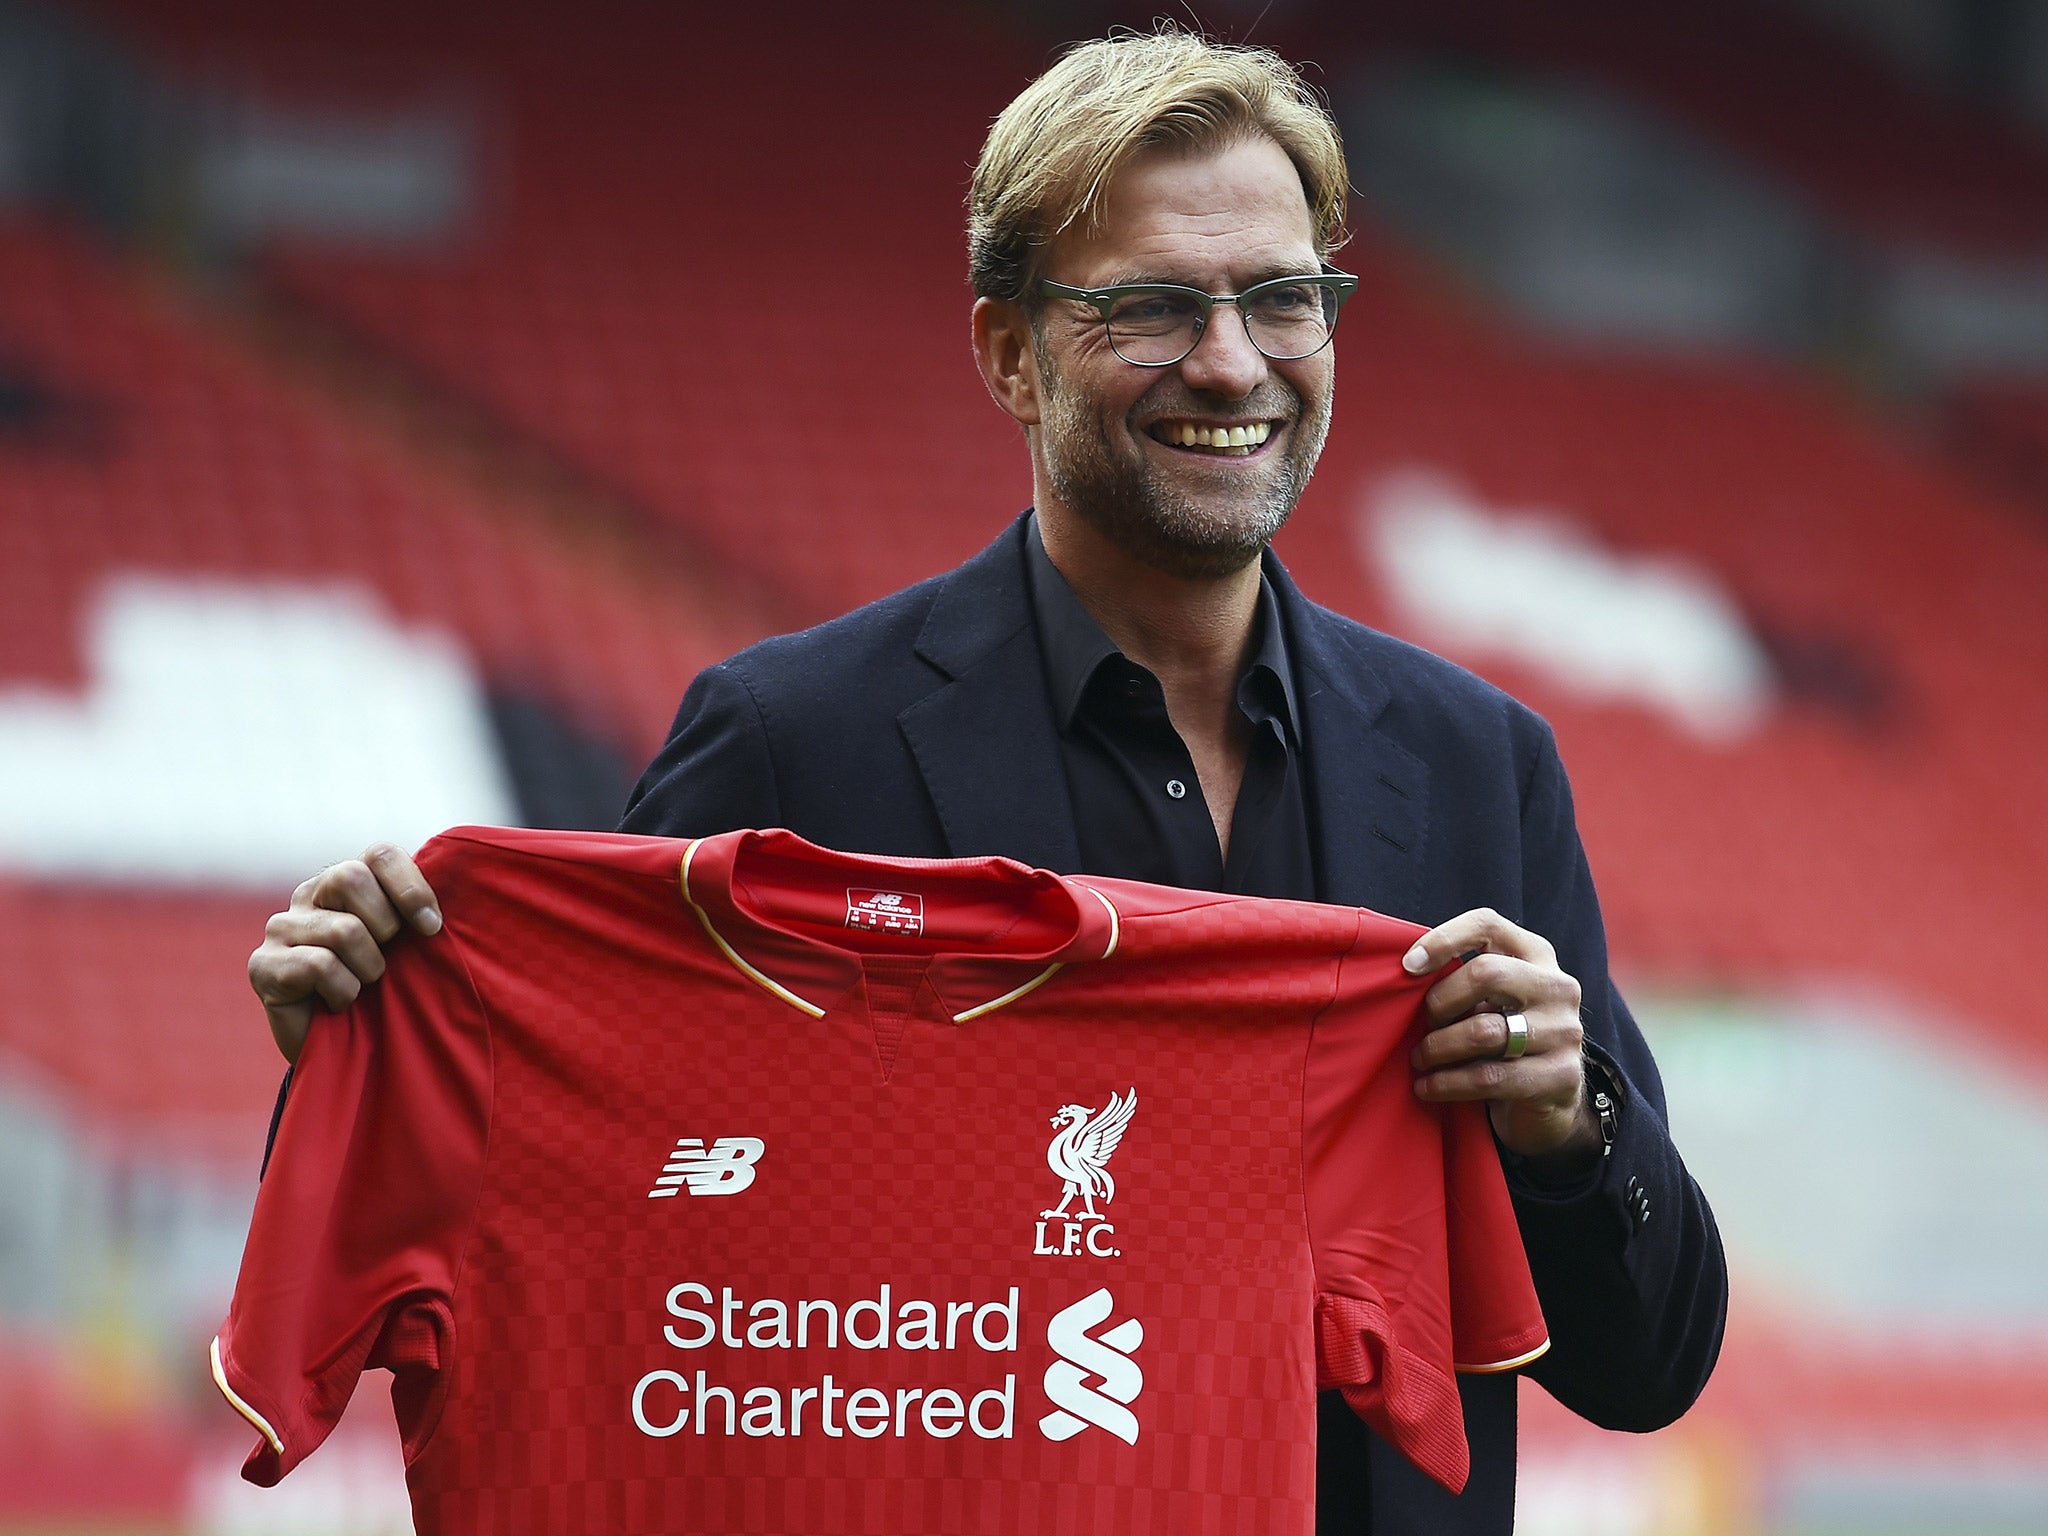 The new Liverpool manager Jurgen Klopp